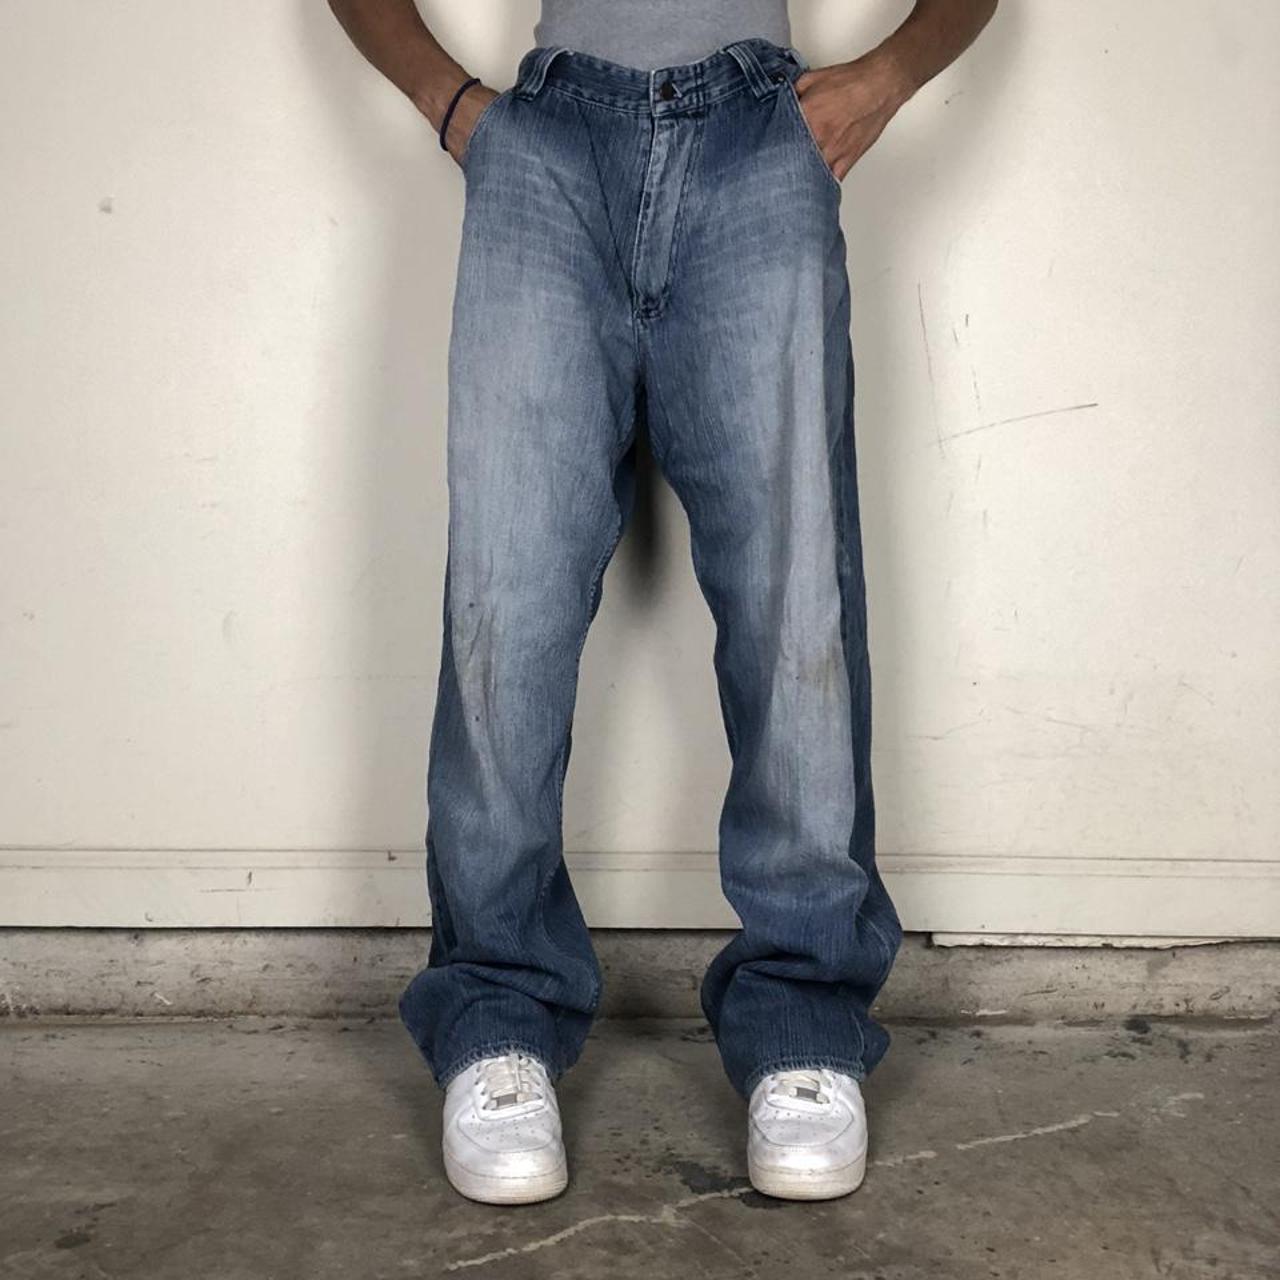 Michael Jordan Denim Washed Jeans Mens Size 38 x 34... - Depop